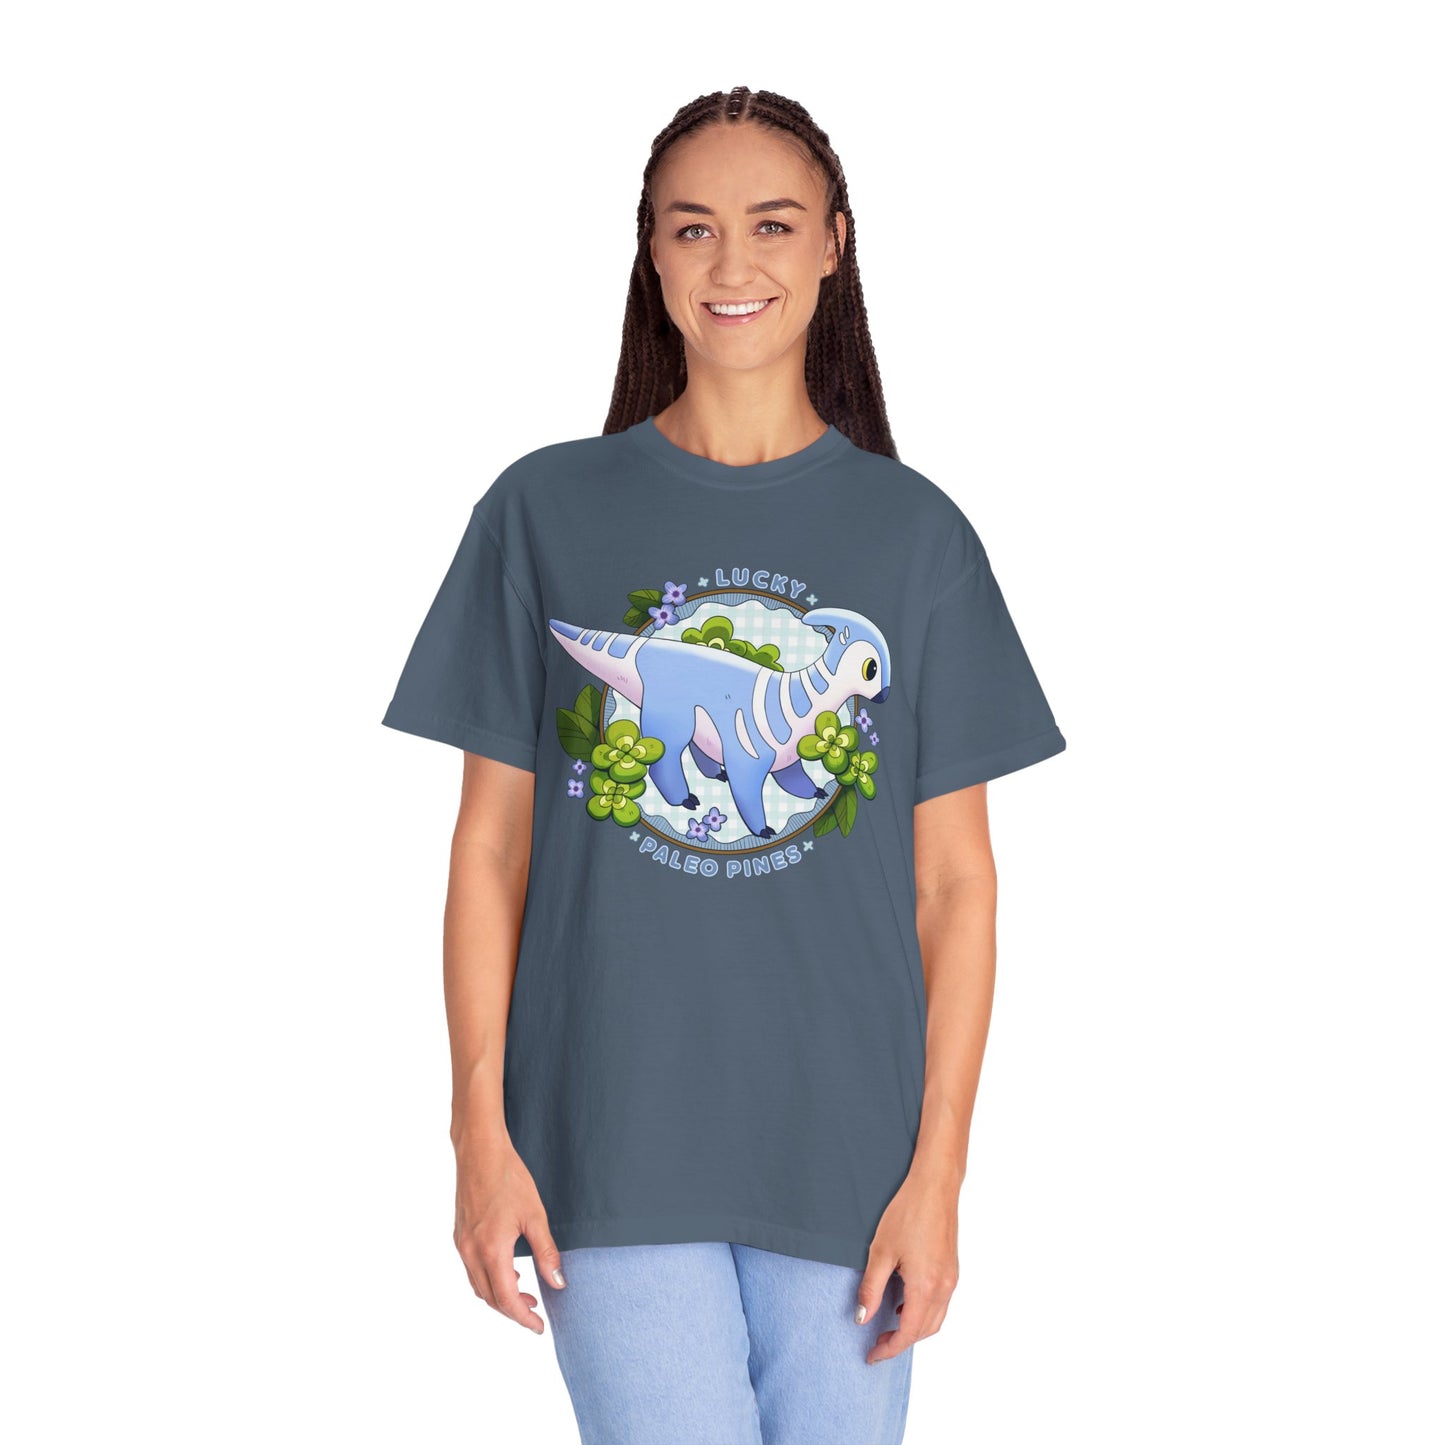 Triassea Lucky - Unisex Garment-Dyed T-Shirt